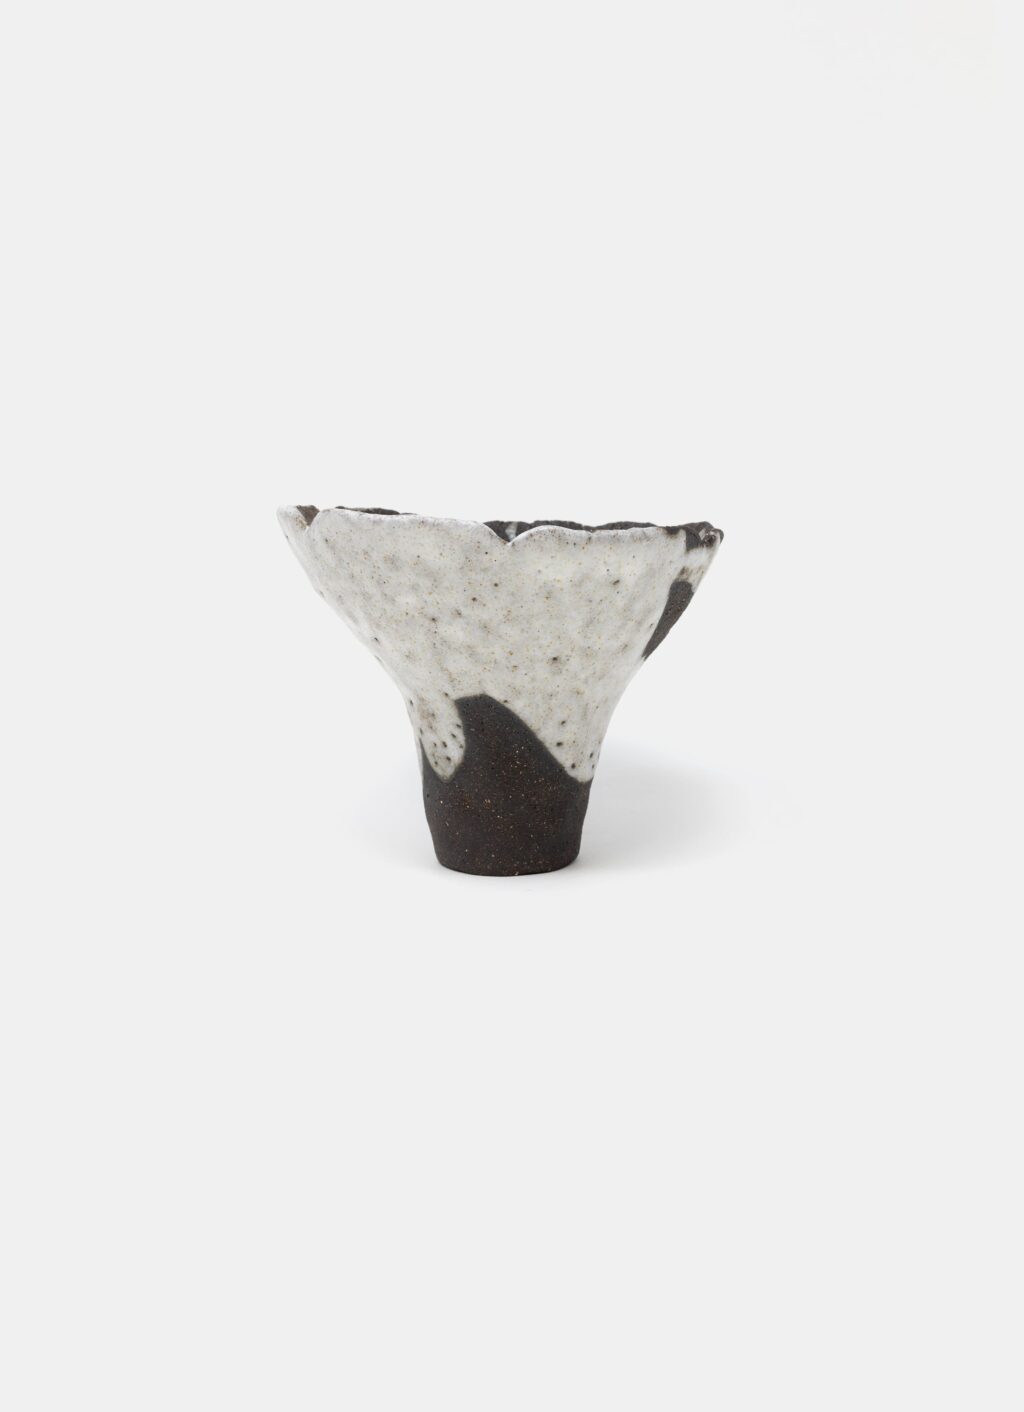 Mano Mani - Ikebana Vase - Dark Stoneware and white glaze - 4